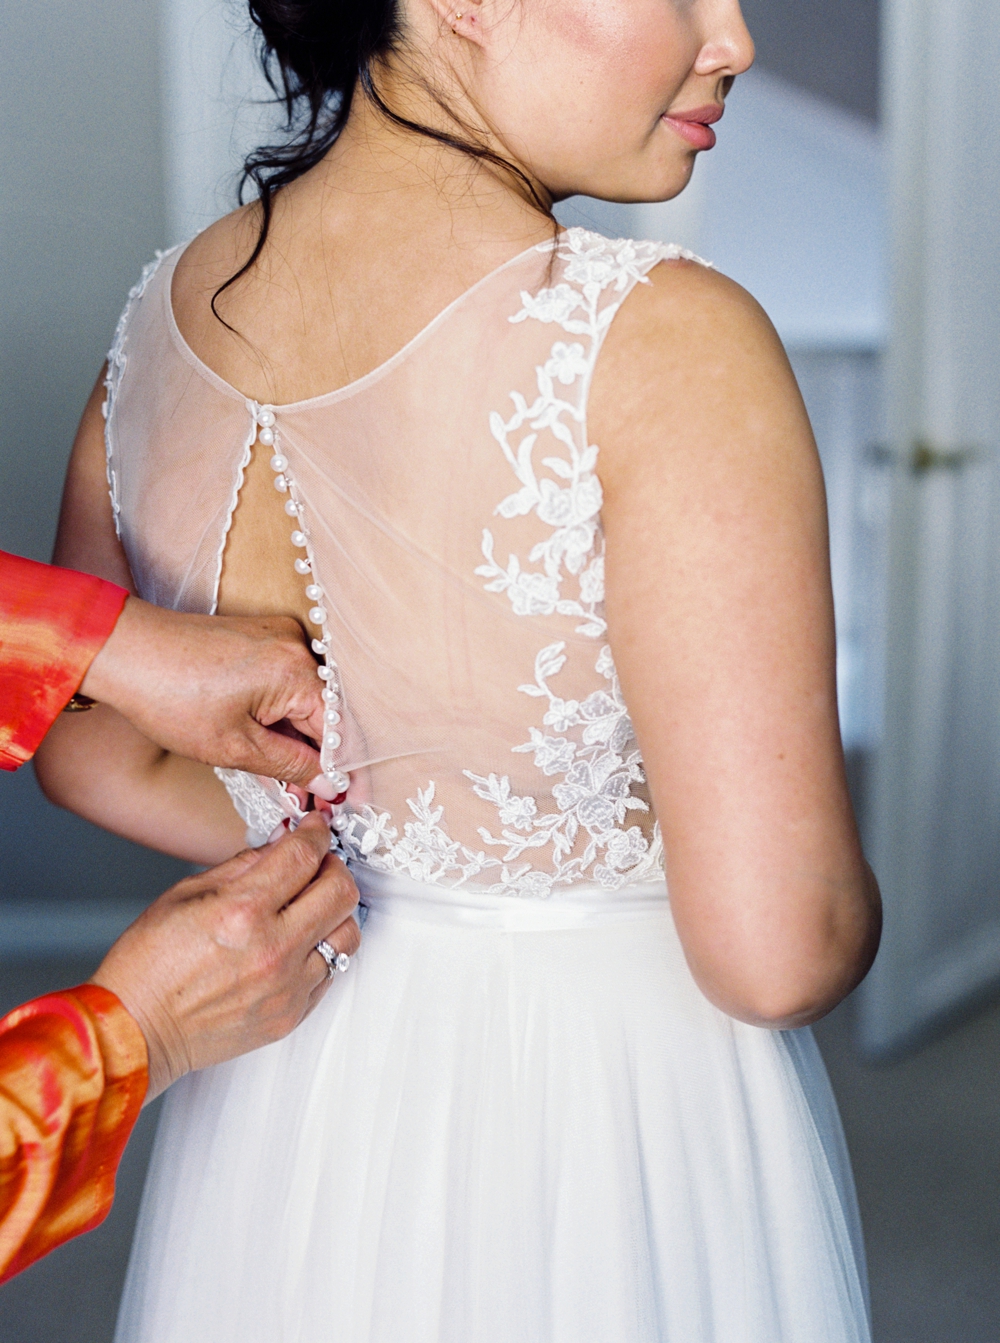 Calgary Wedding Photographers | Edmonton Vietnamese German Wedding | Watters wedding dress & multi colored asian dresses